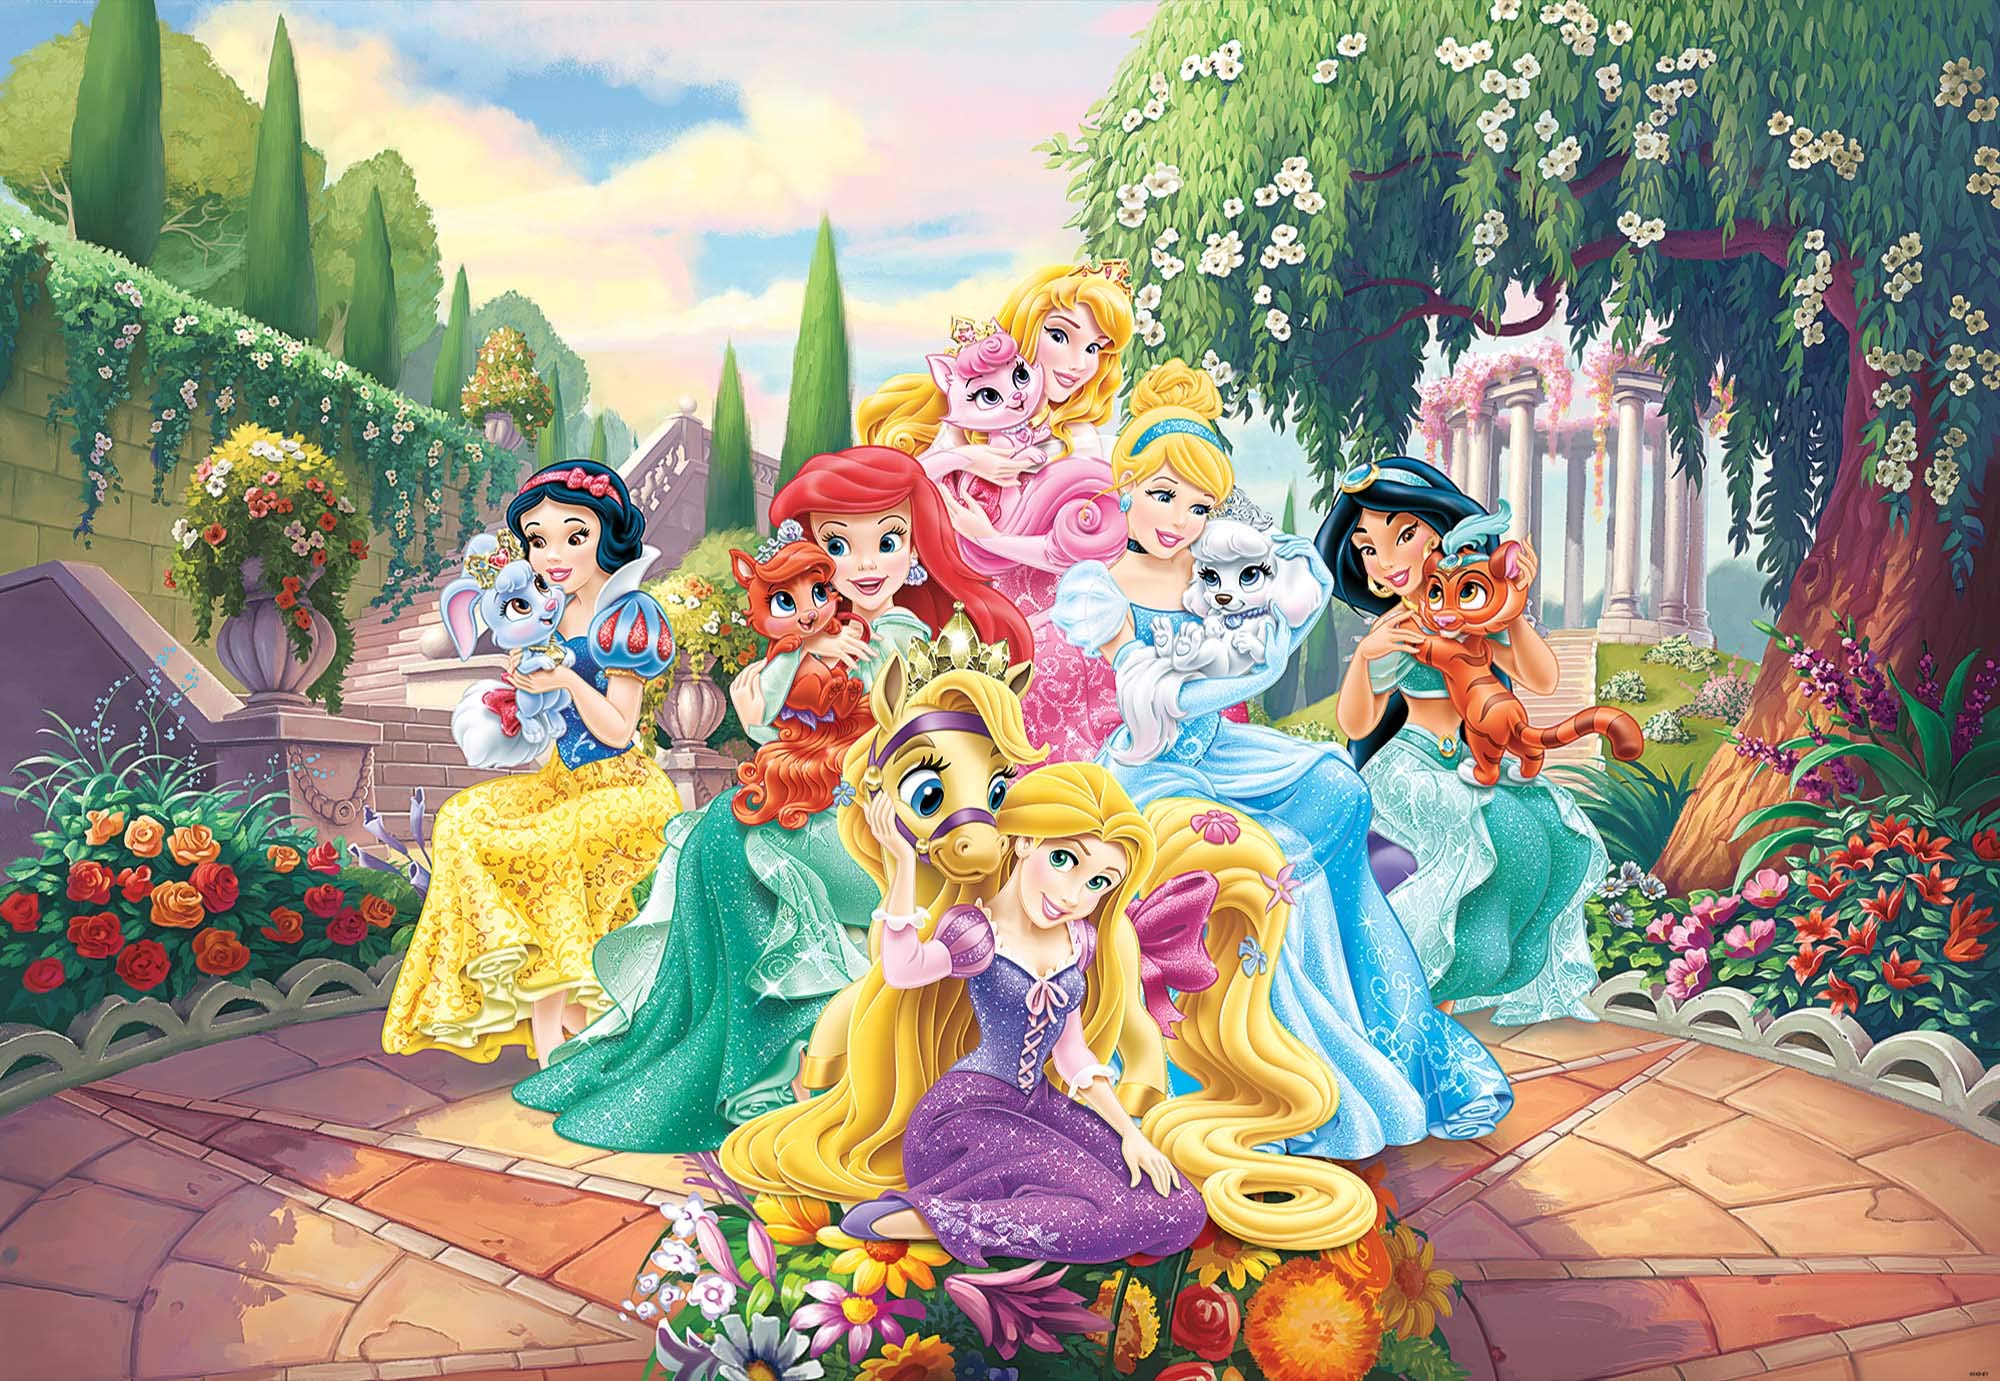 Disney Princesses Rapunzel Ariel Wallpaper Mural Wall Poster x 184cm Paper (NOT EasyInstall) Pieces AD2492P4 254cm x 184cm